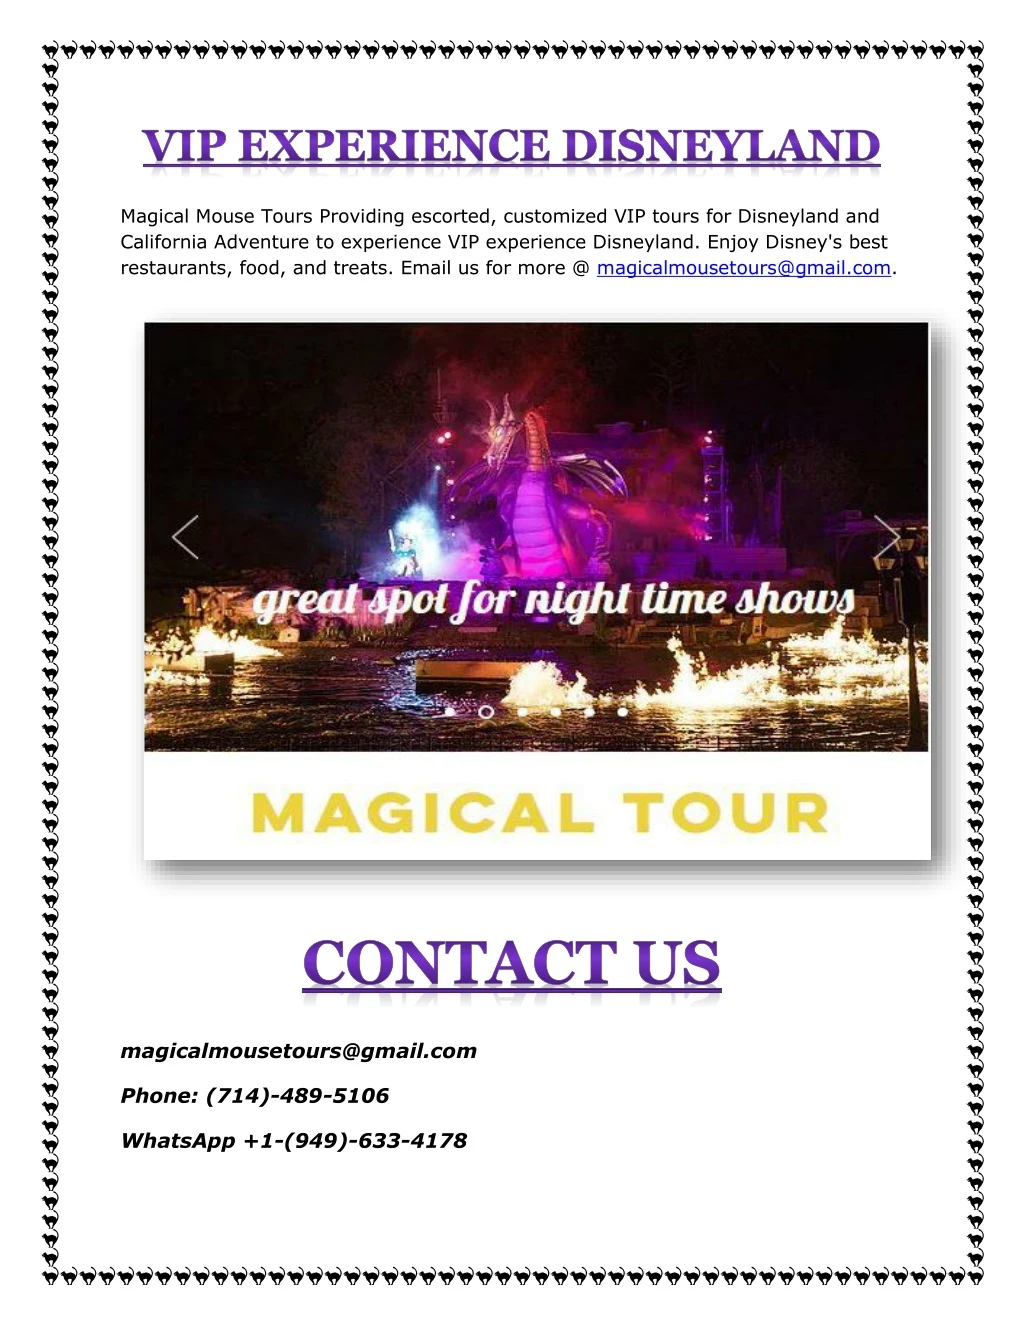 magical mouse tours providing escorted customized